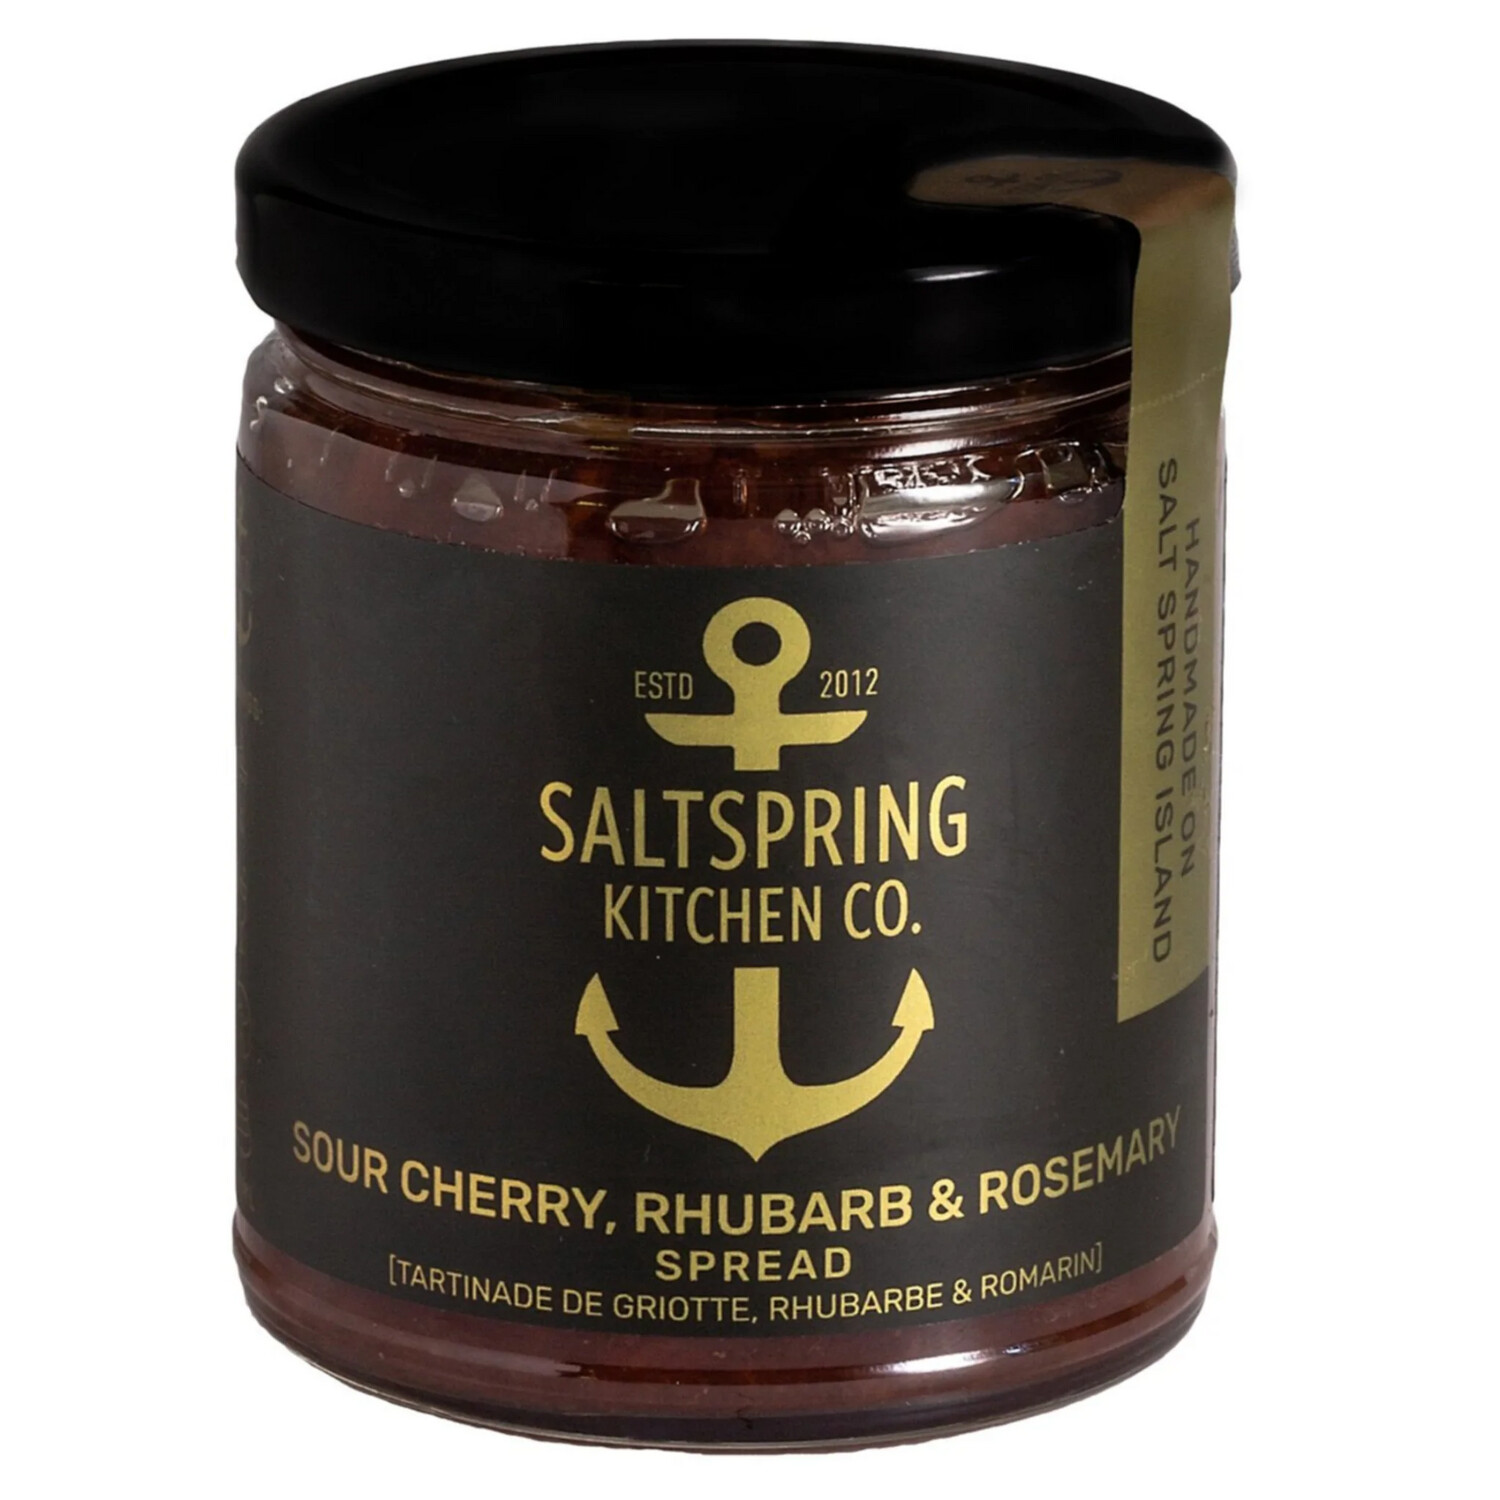 Sour Cherry, Rhubard & Rosemary Preserve